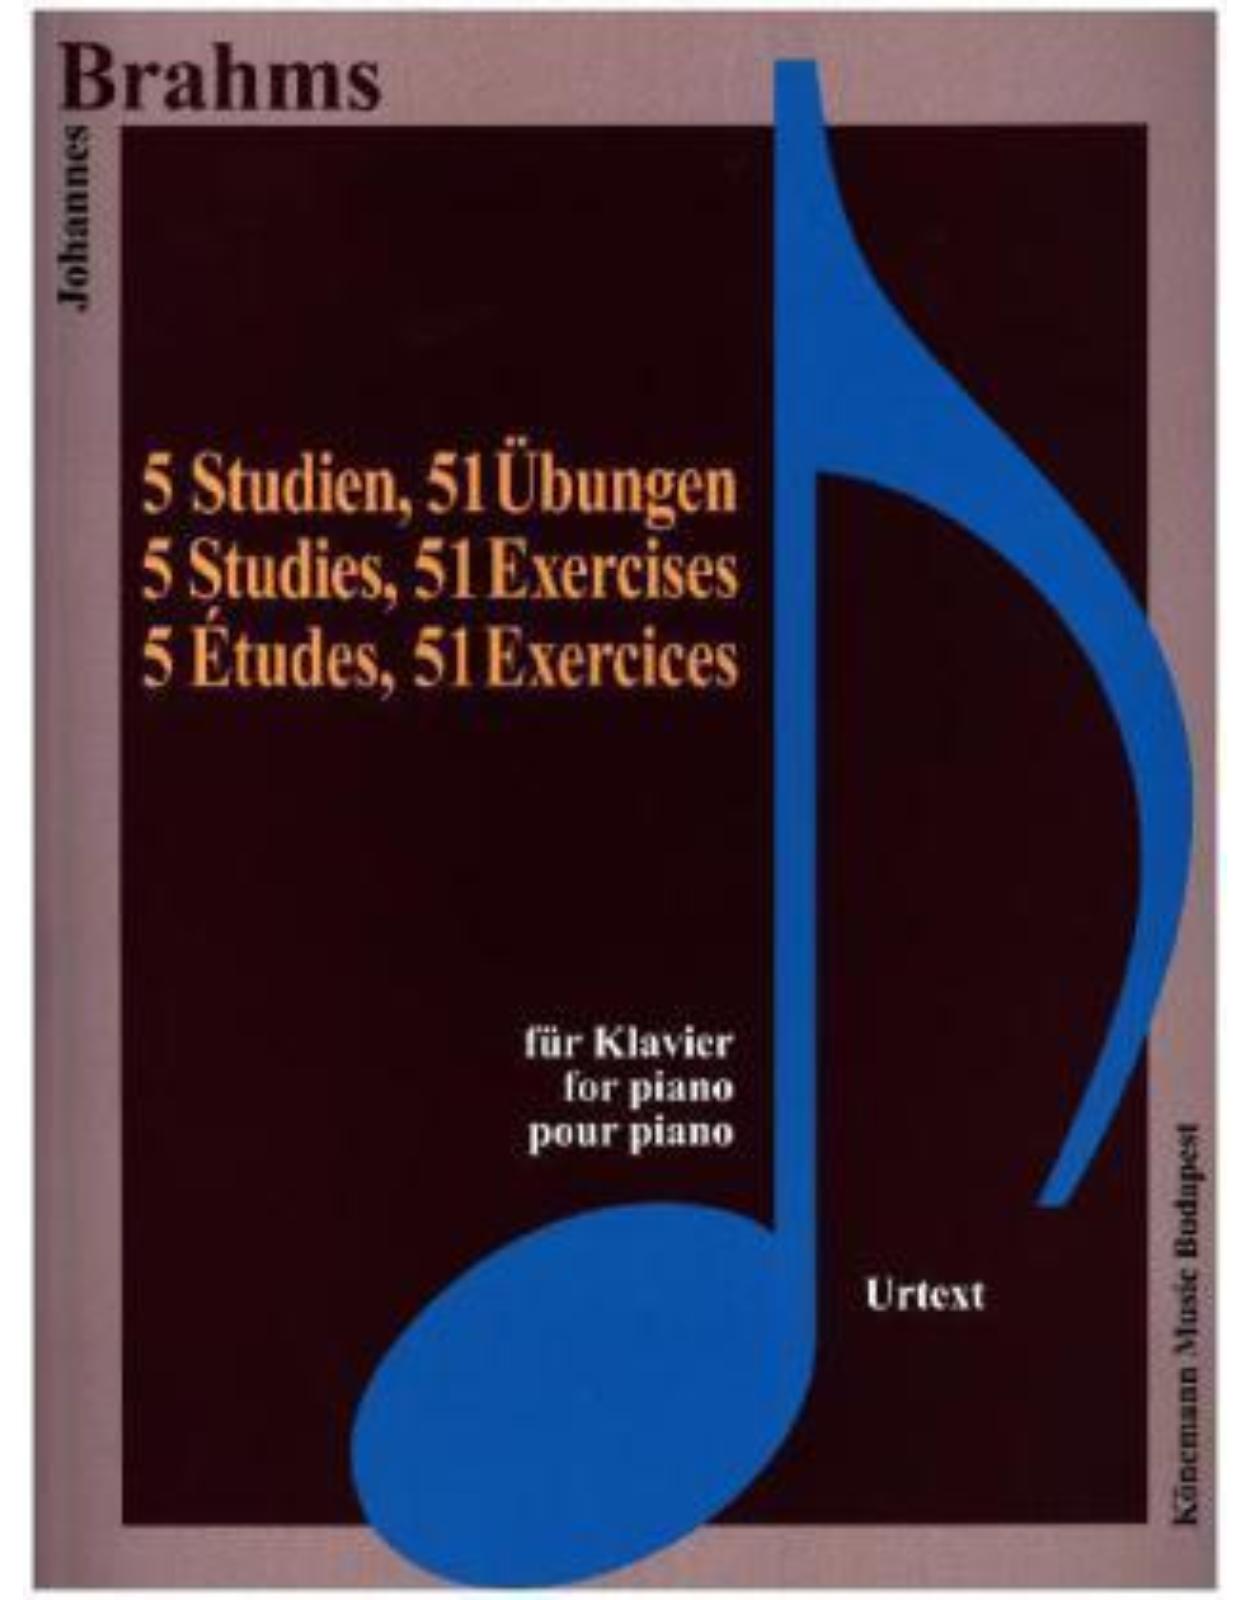 Brahms, 5 Studien, 51 Übungen 